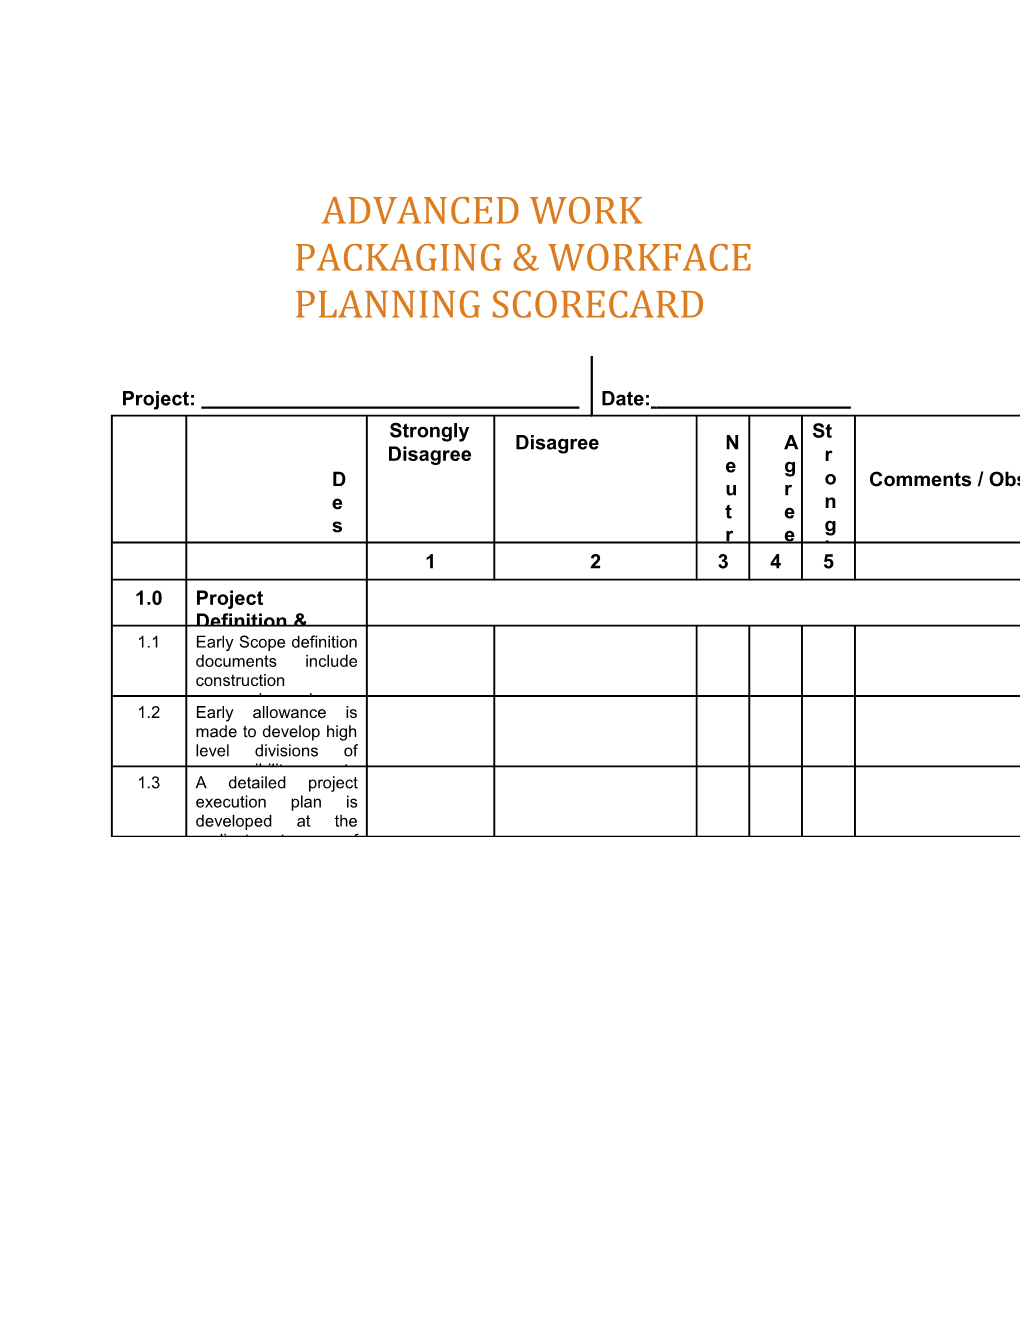 WFP-TMP-2013-108-A AWP Scorecard